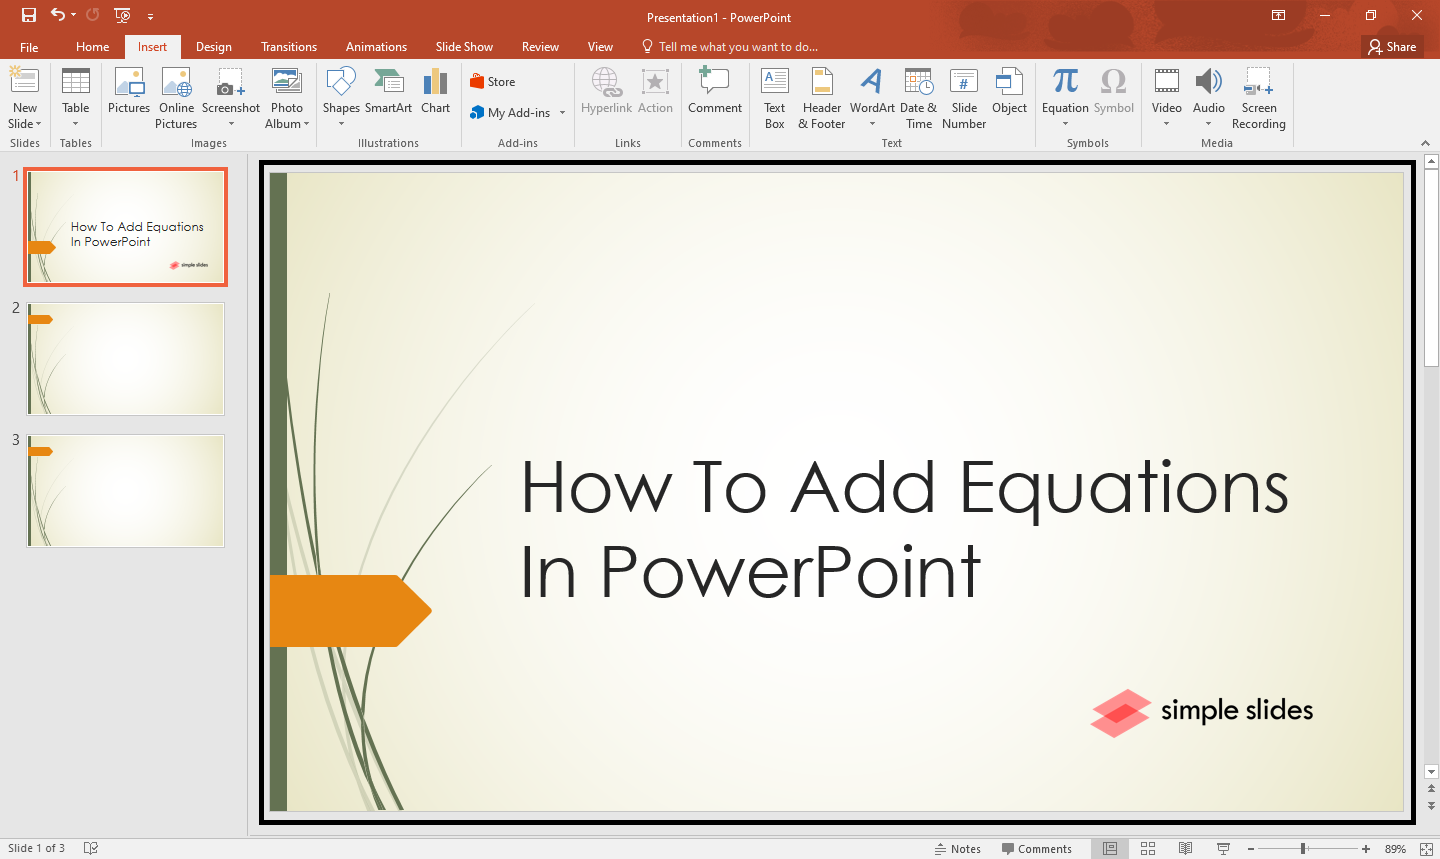 Open your PowerPoint presentation